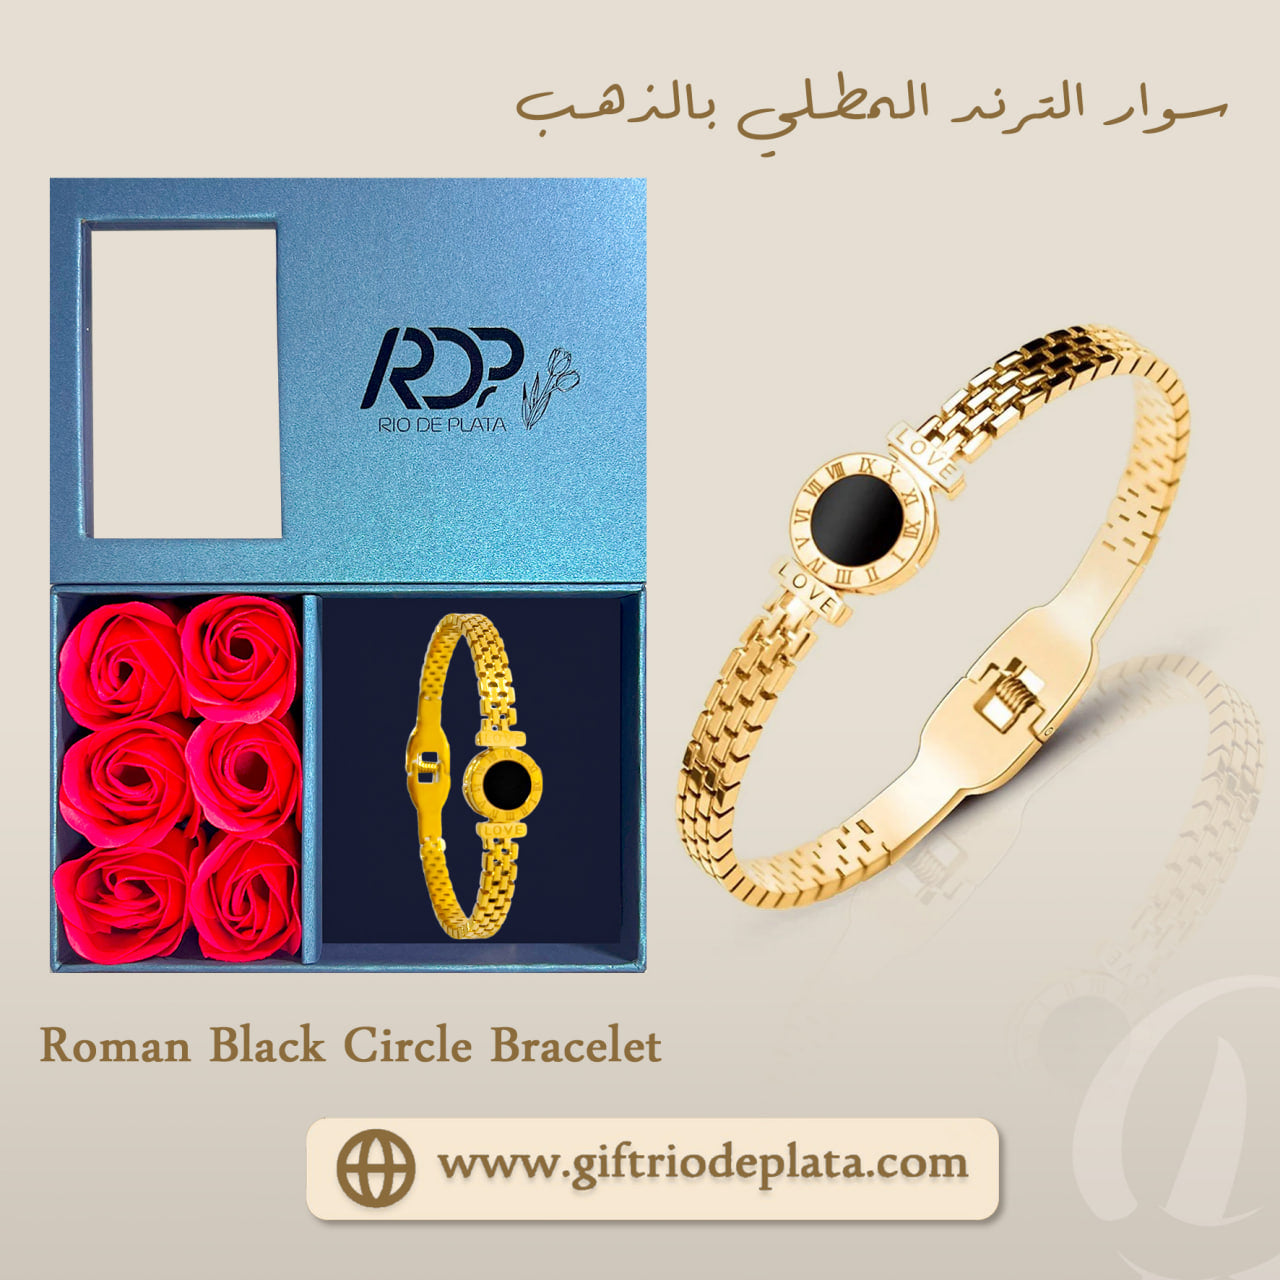 Roman Black Circle Bracelet